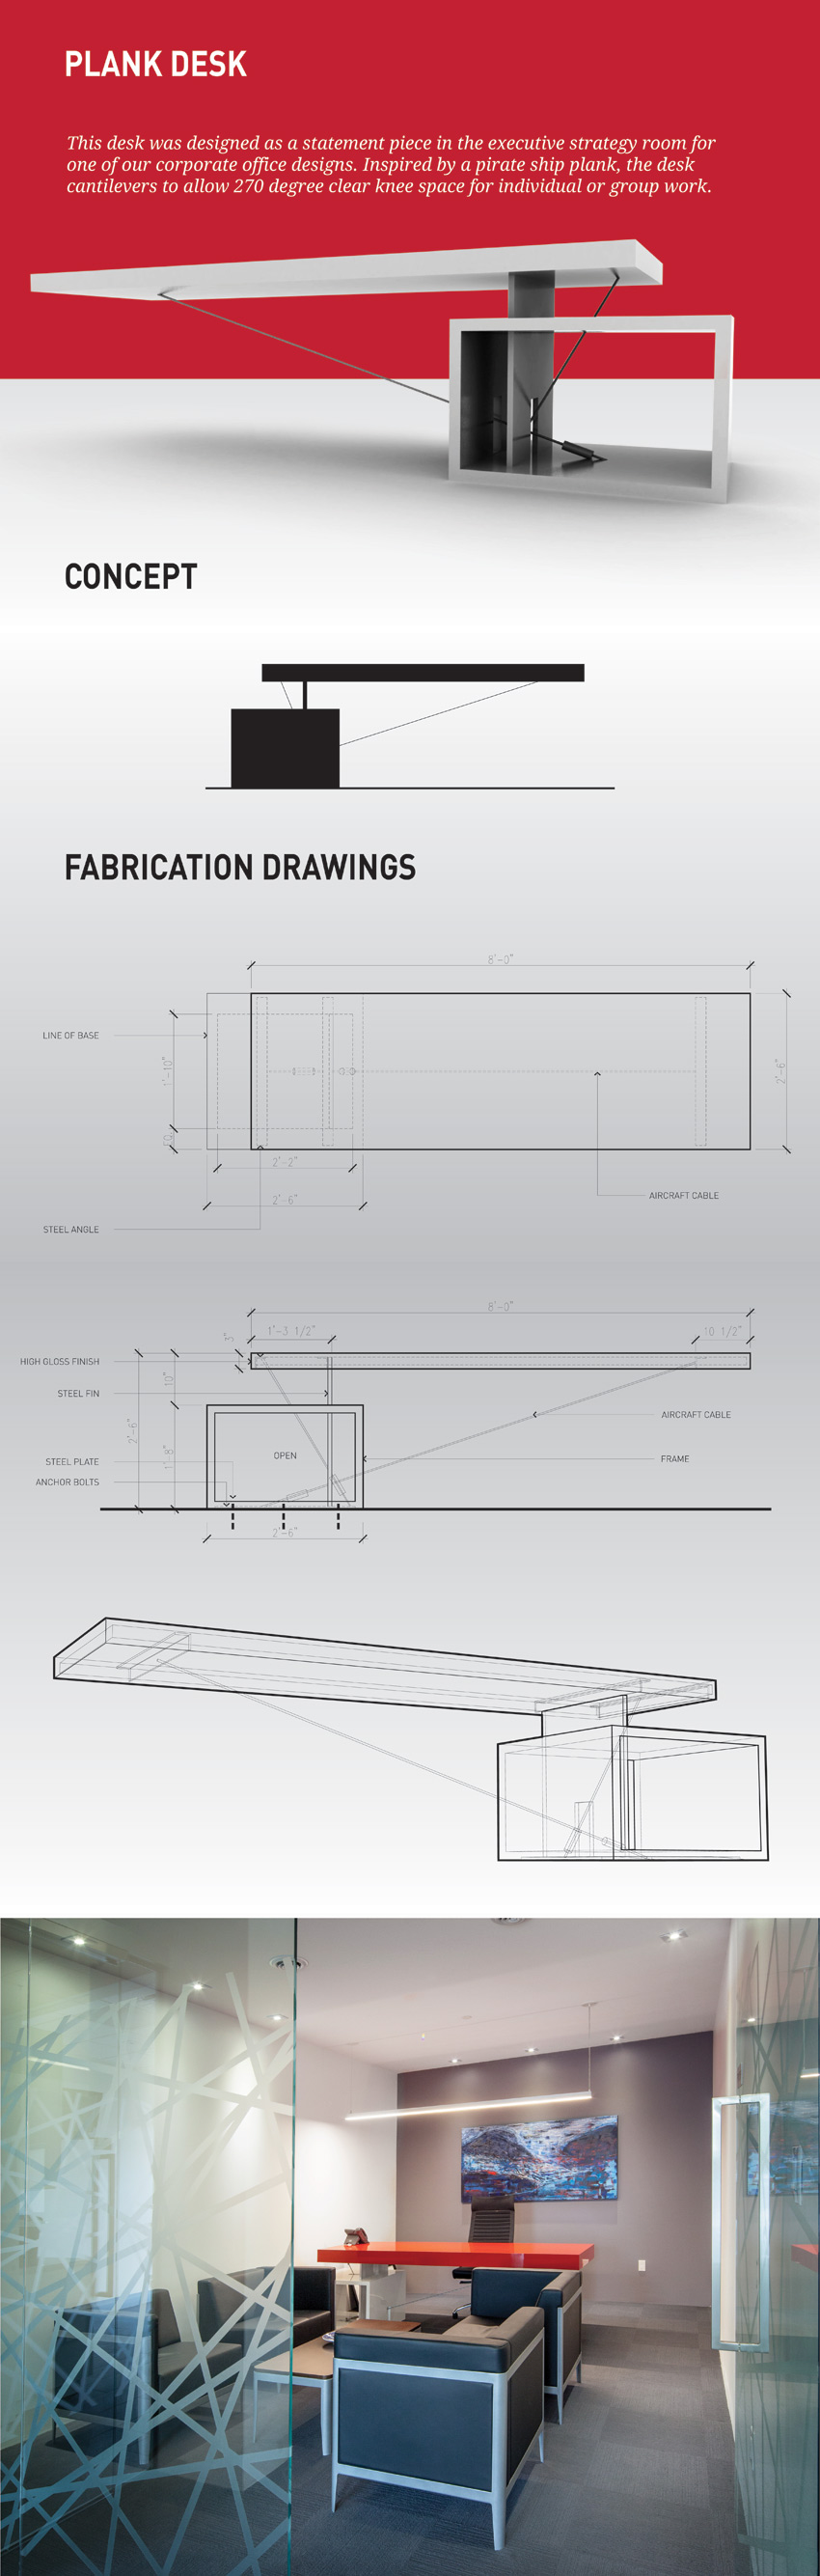 plank-desk2